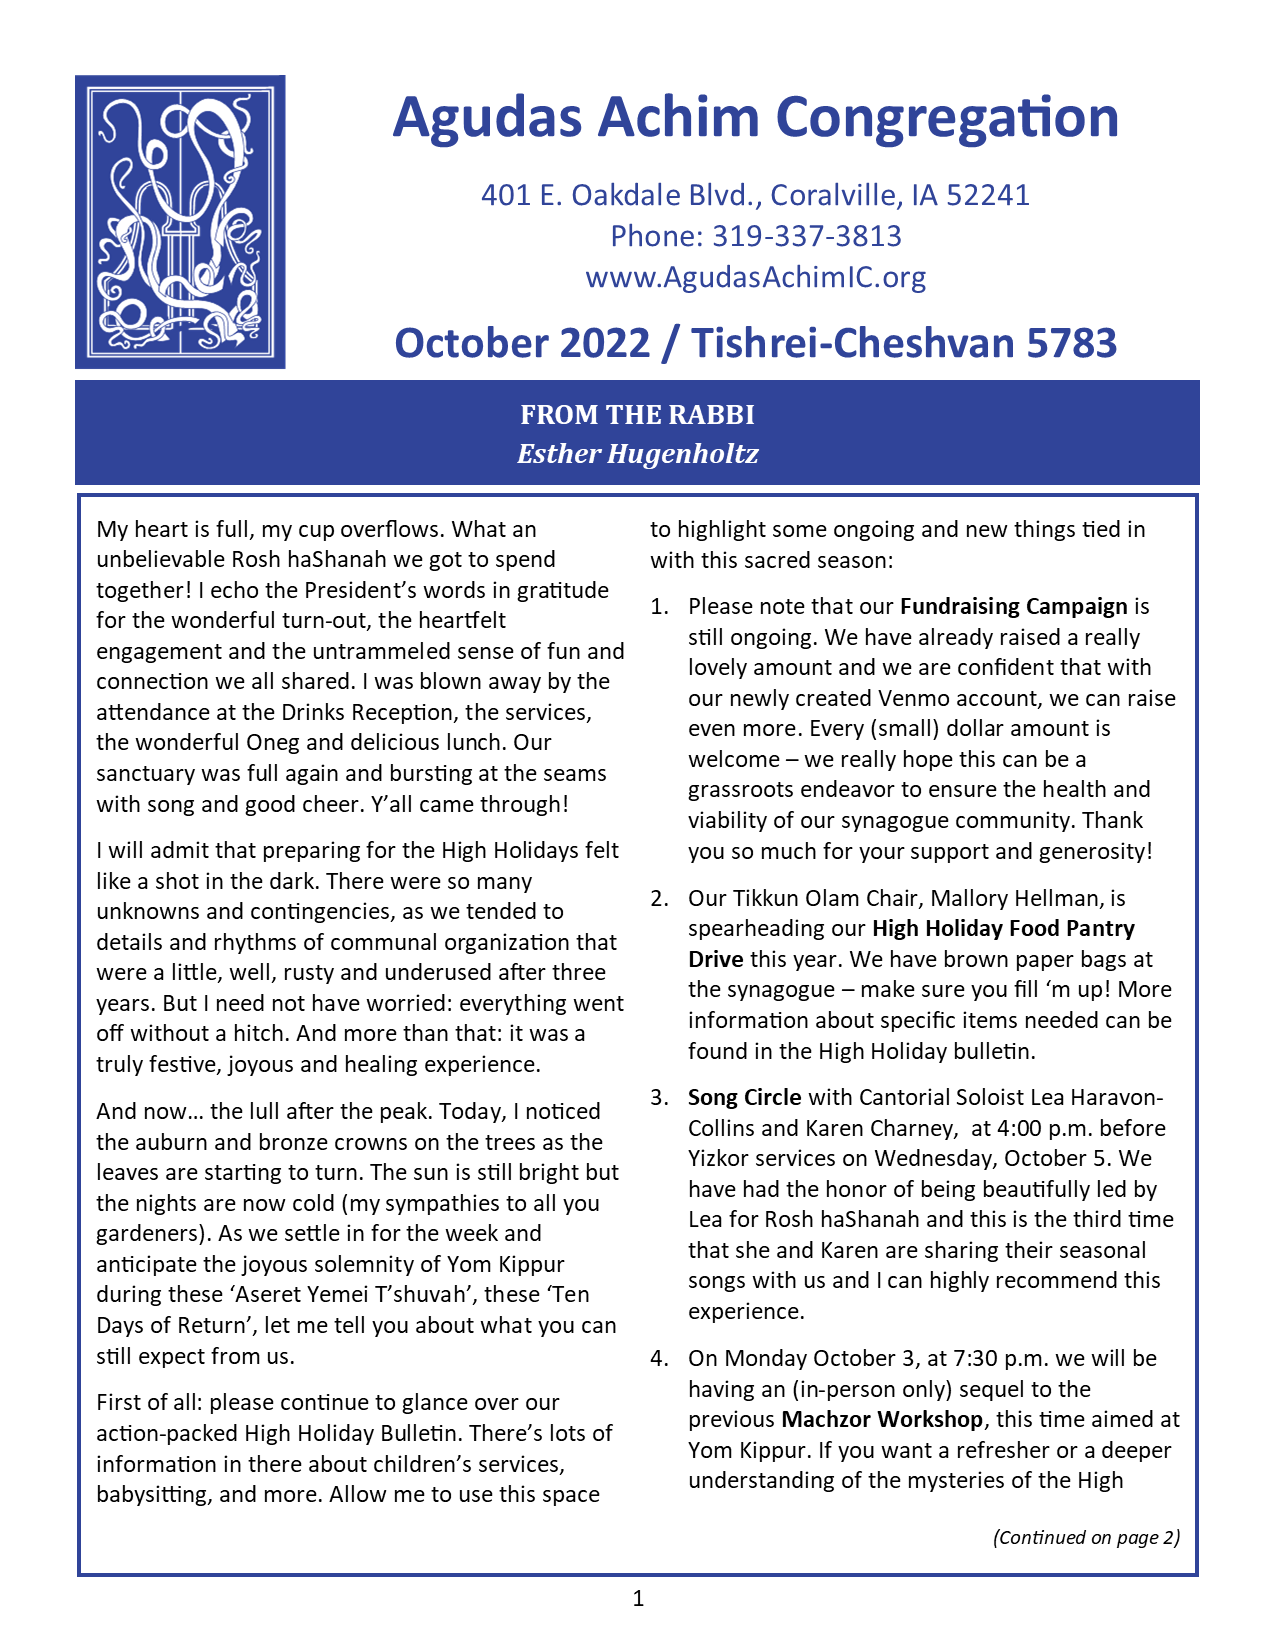 October 2022 Bulletin